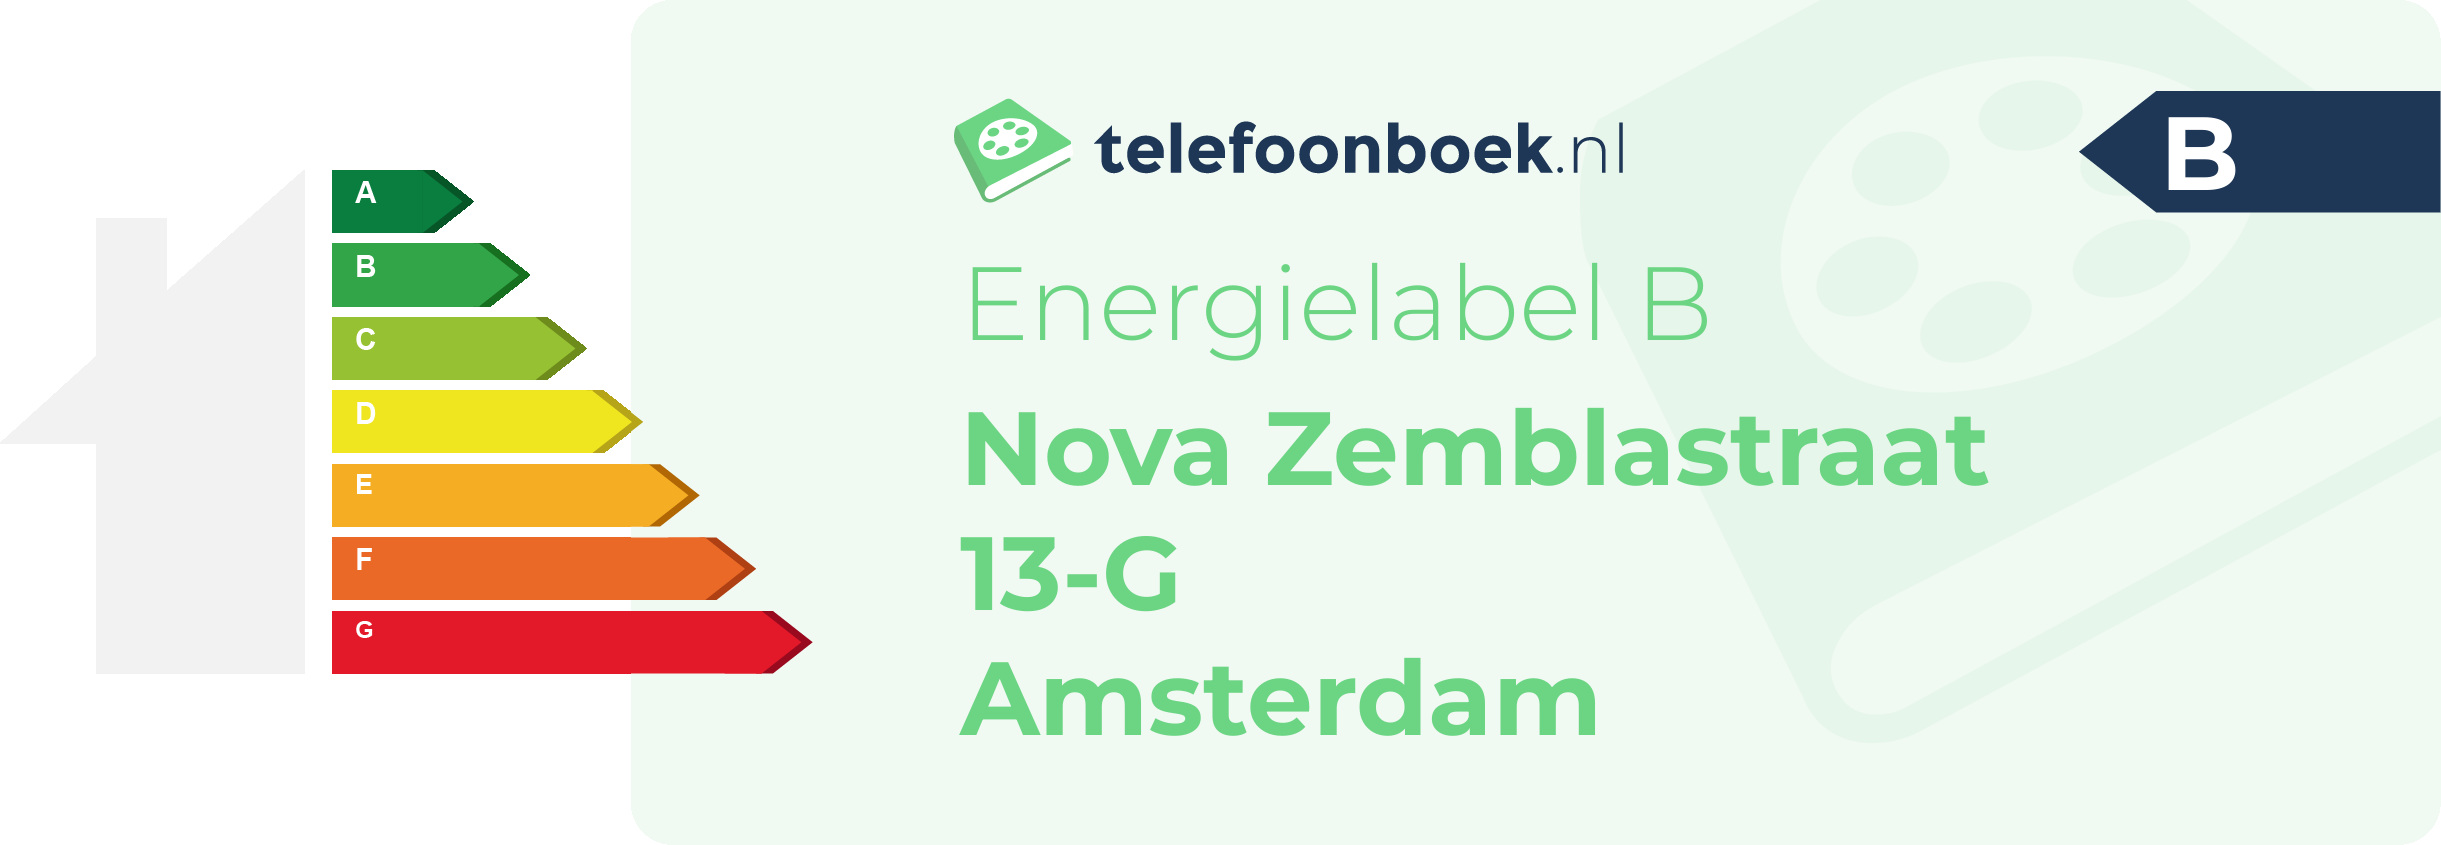 Energielabel Nova Zemblastraat 13-G Amsterdam